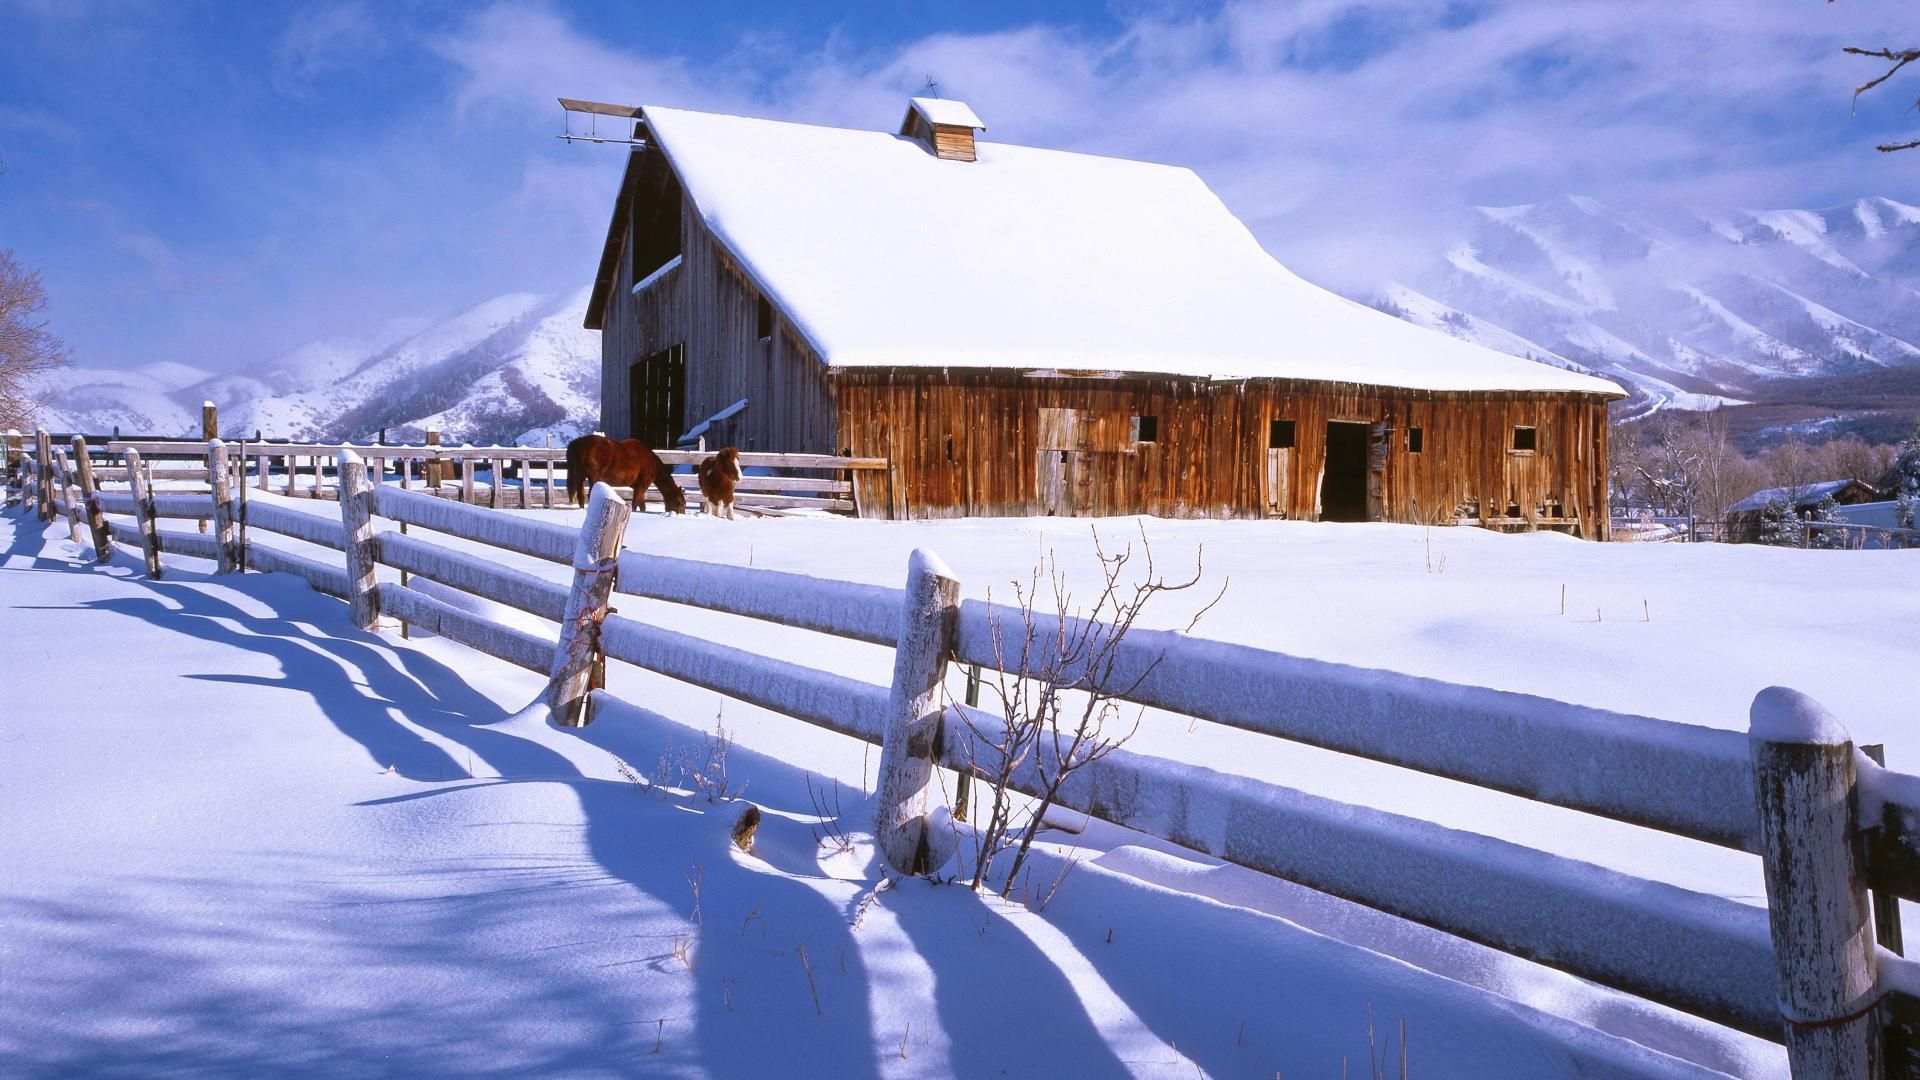 Winter Barn Wallpaper. Winter scenes .com